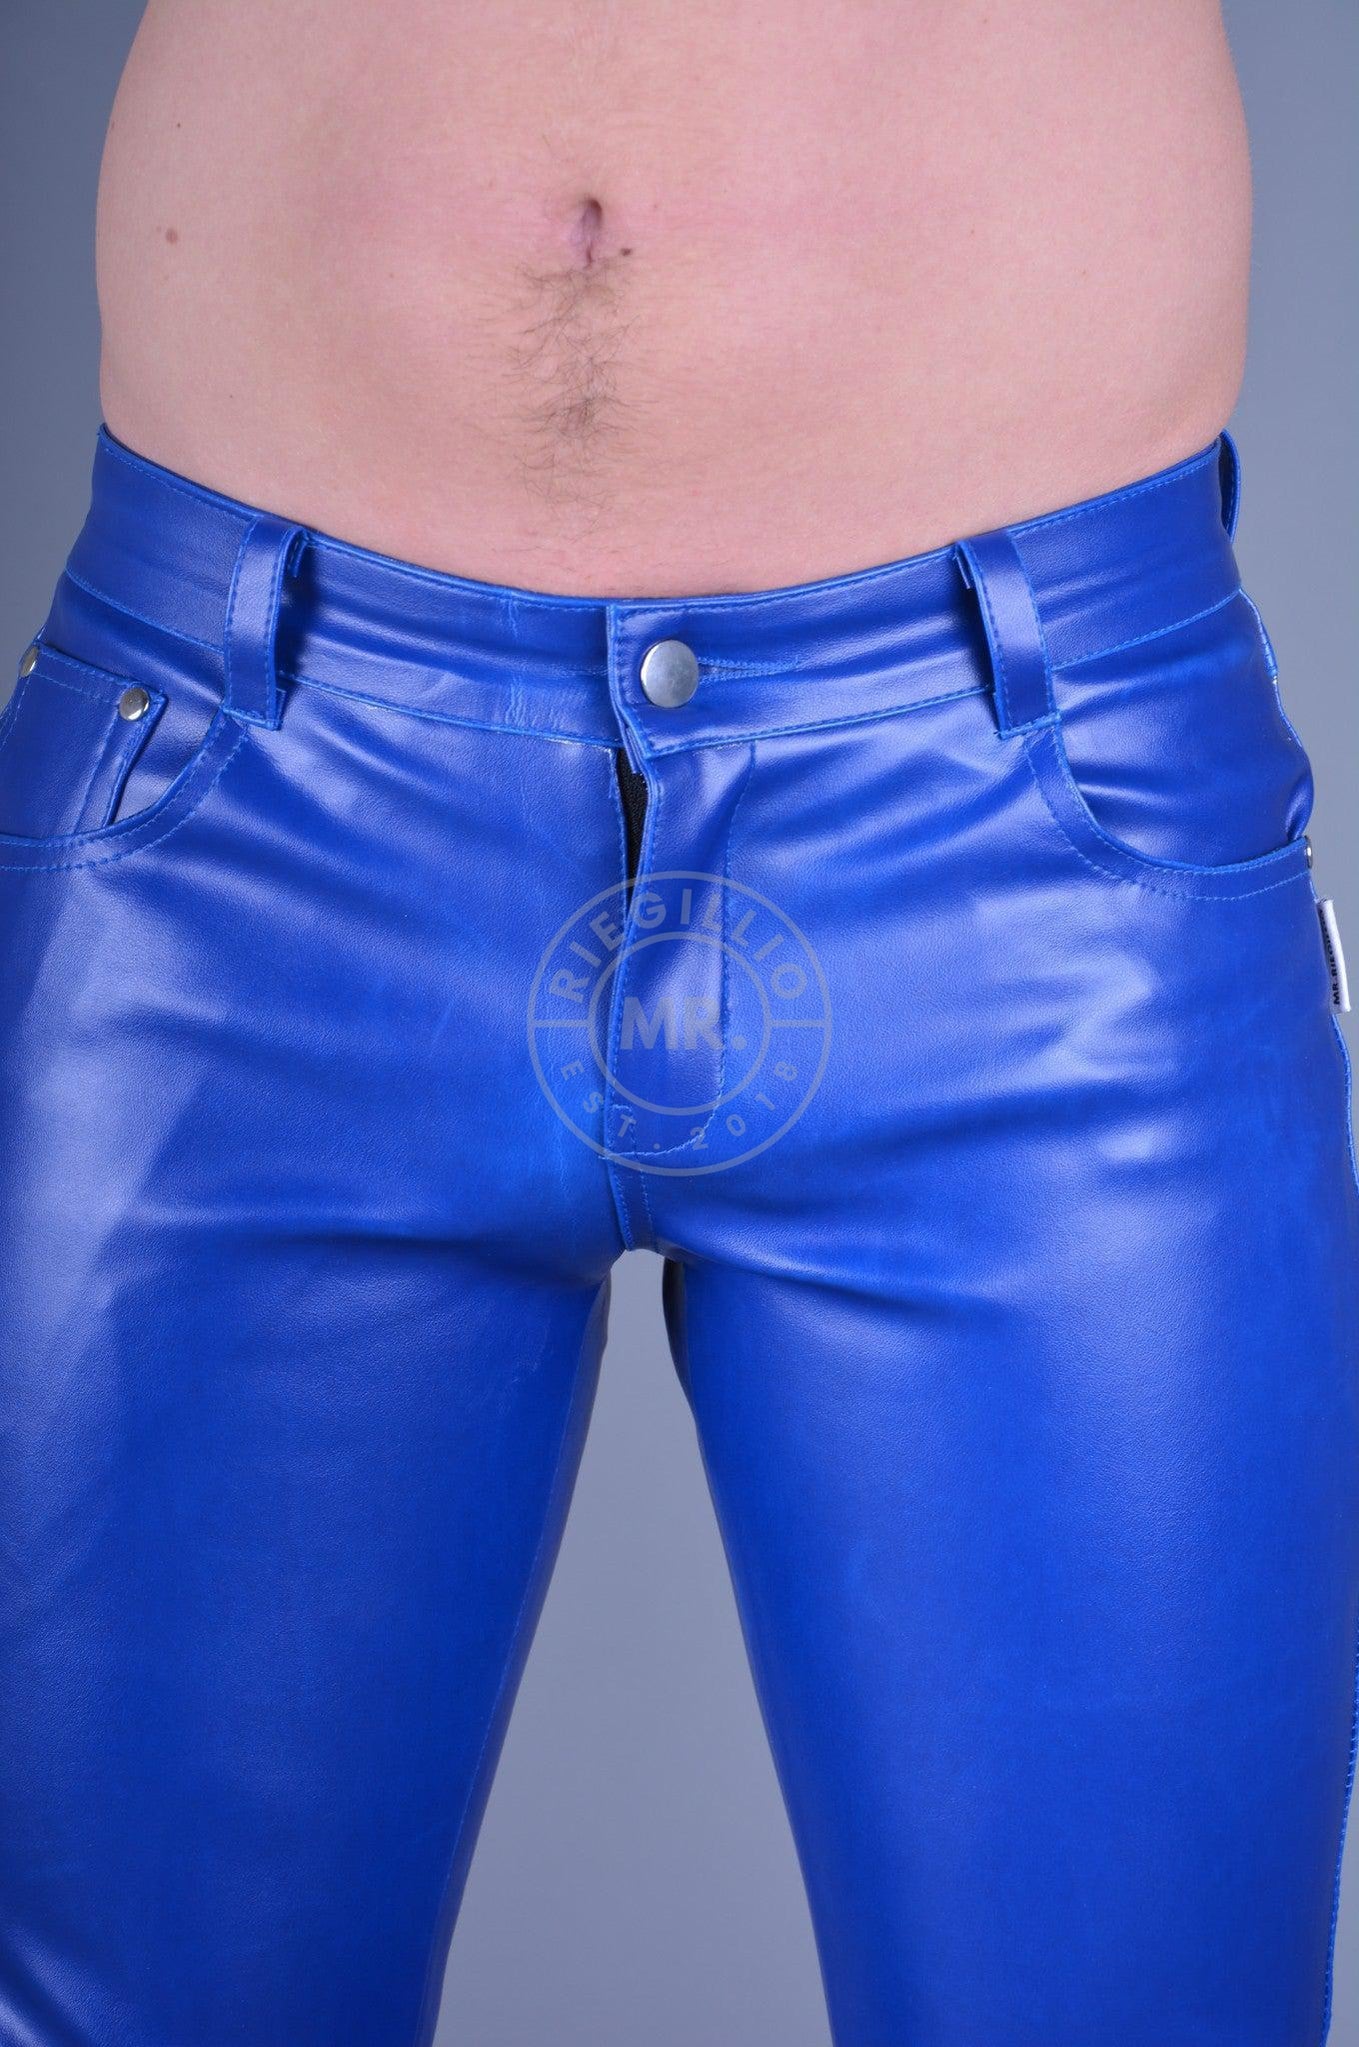 MR. 5-Pocket Pants Blue *DISCONTINUED ITEM*-at MR. Riegillio